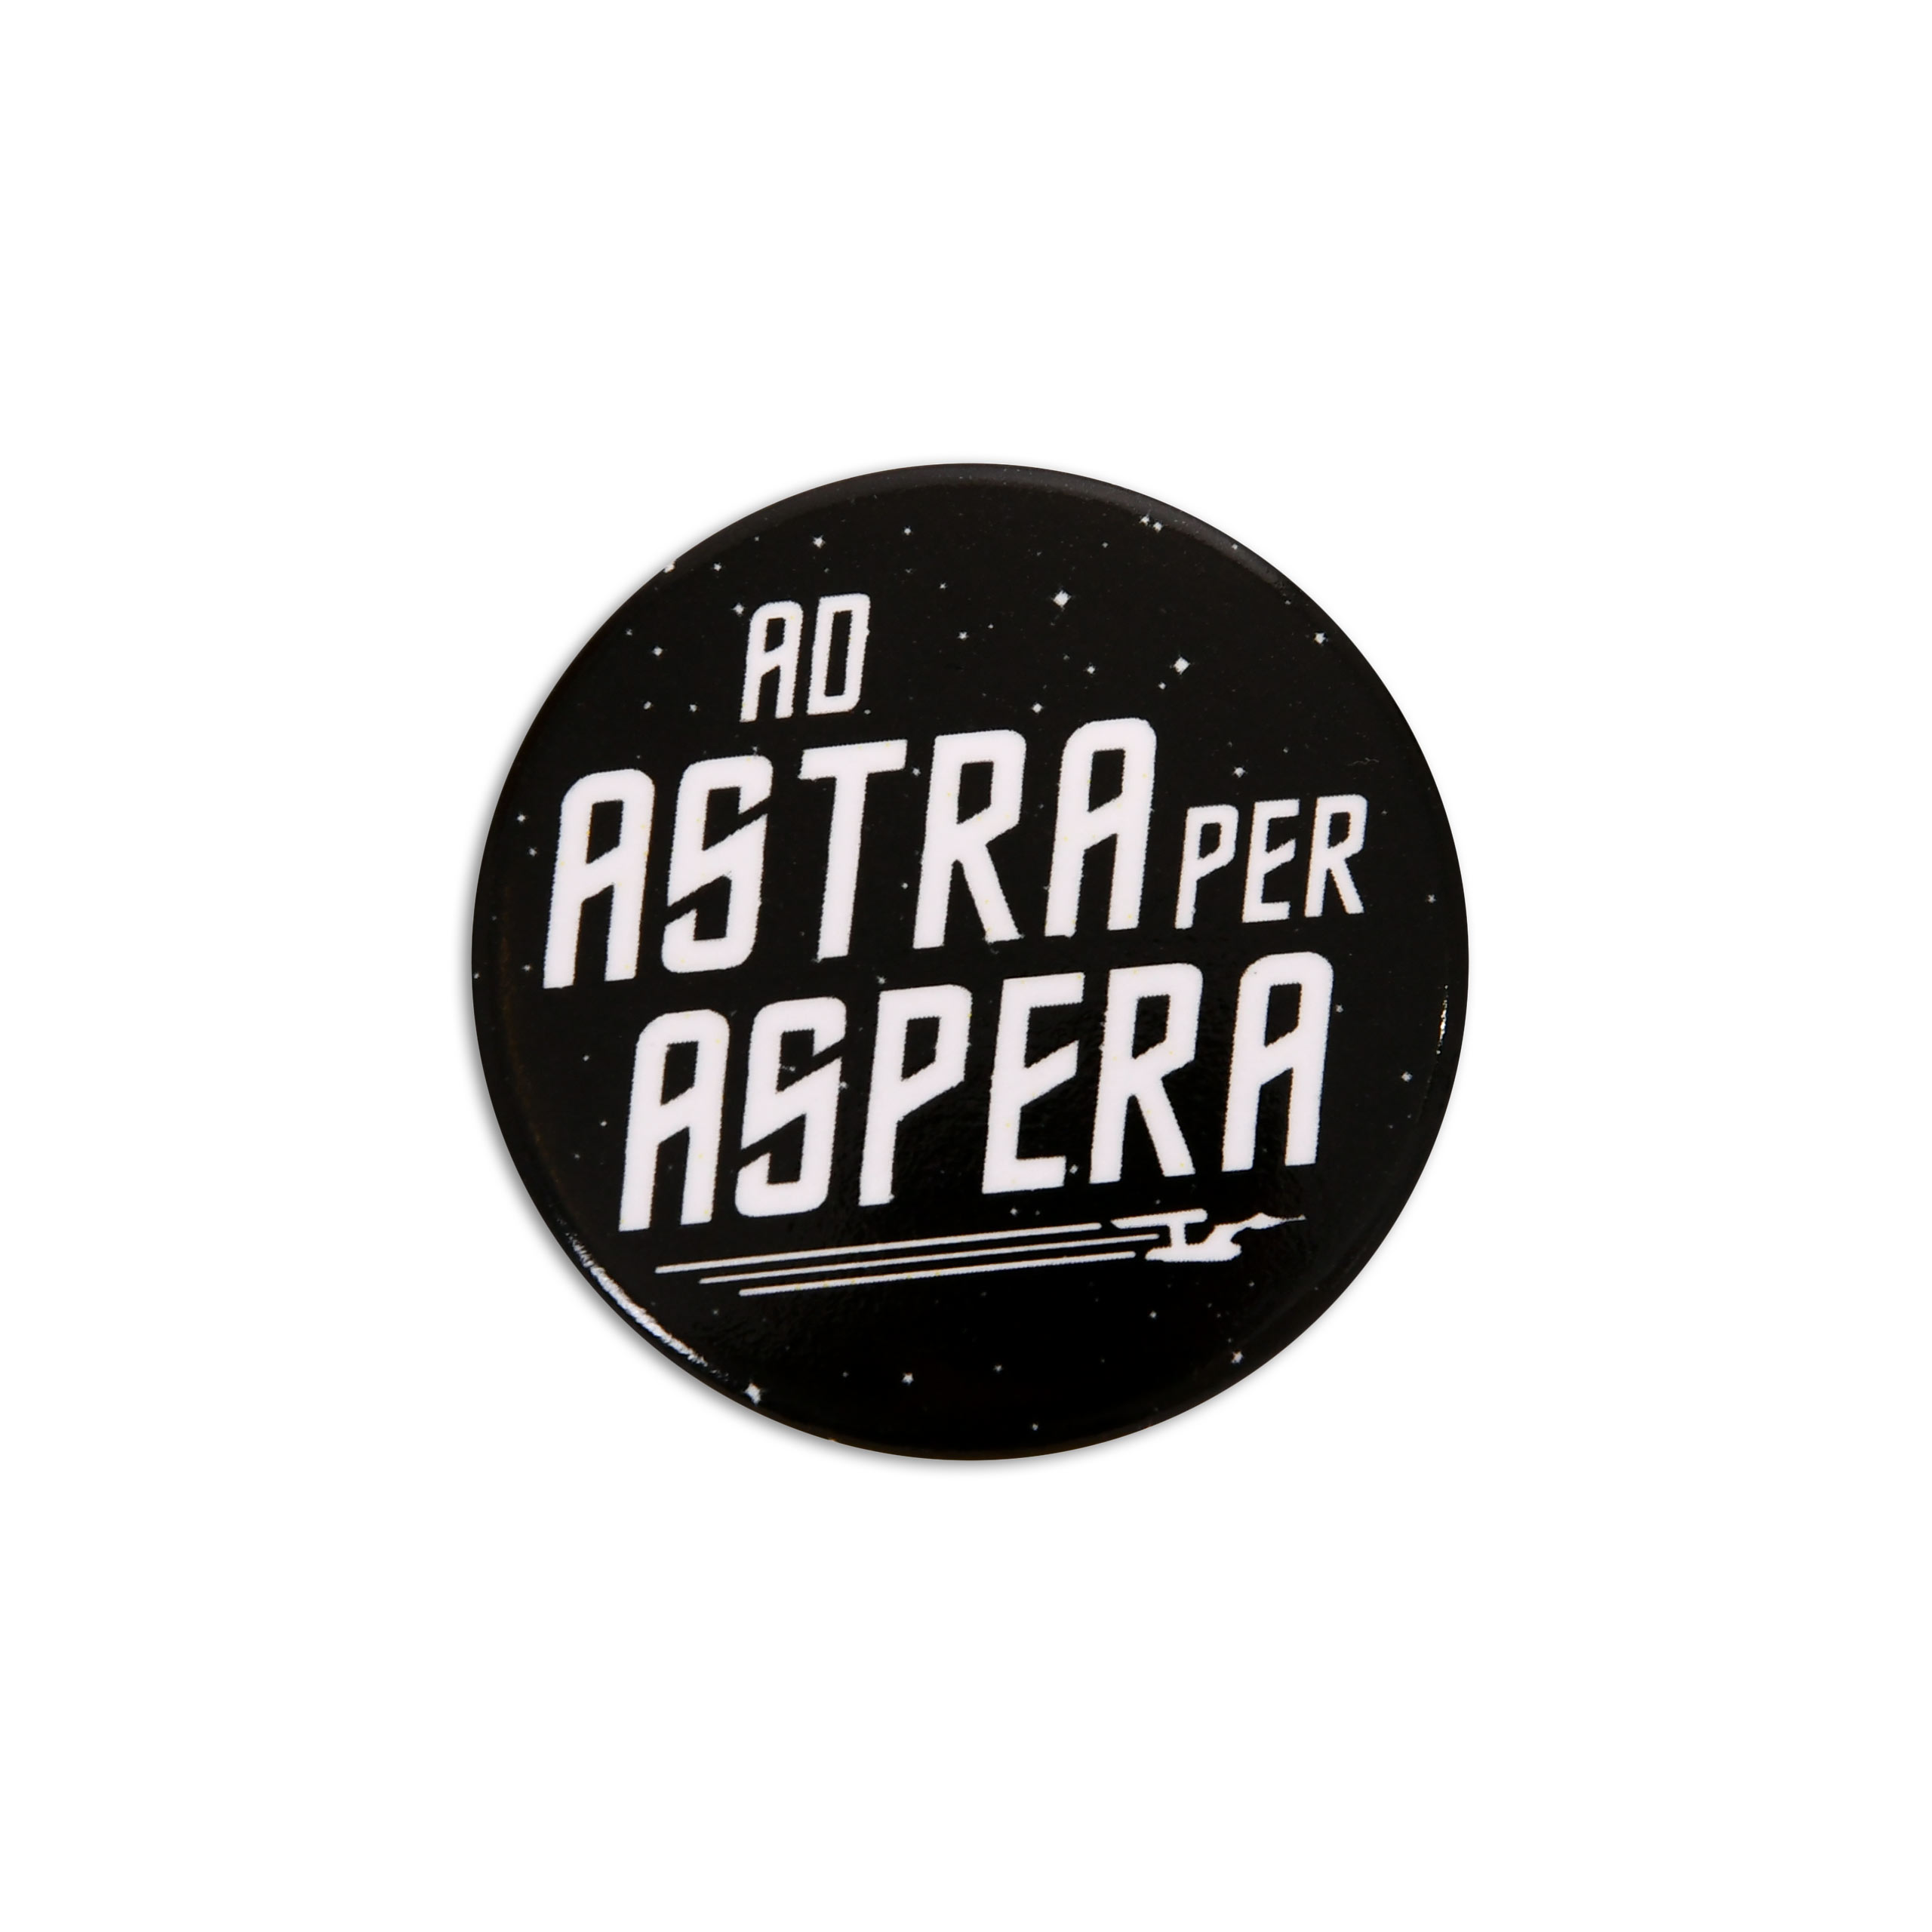 Ad Astra Per Aspera Button voor Star Trek Fans